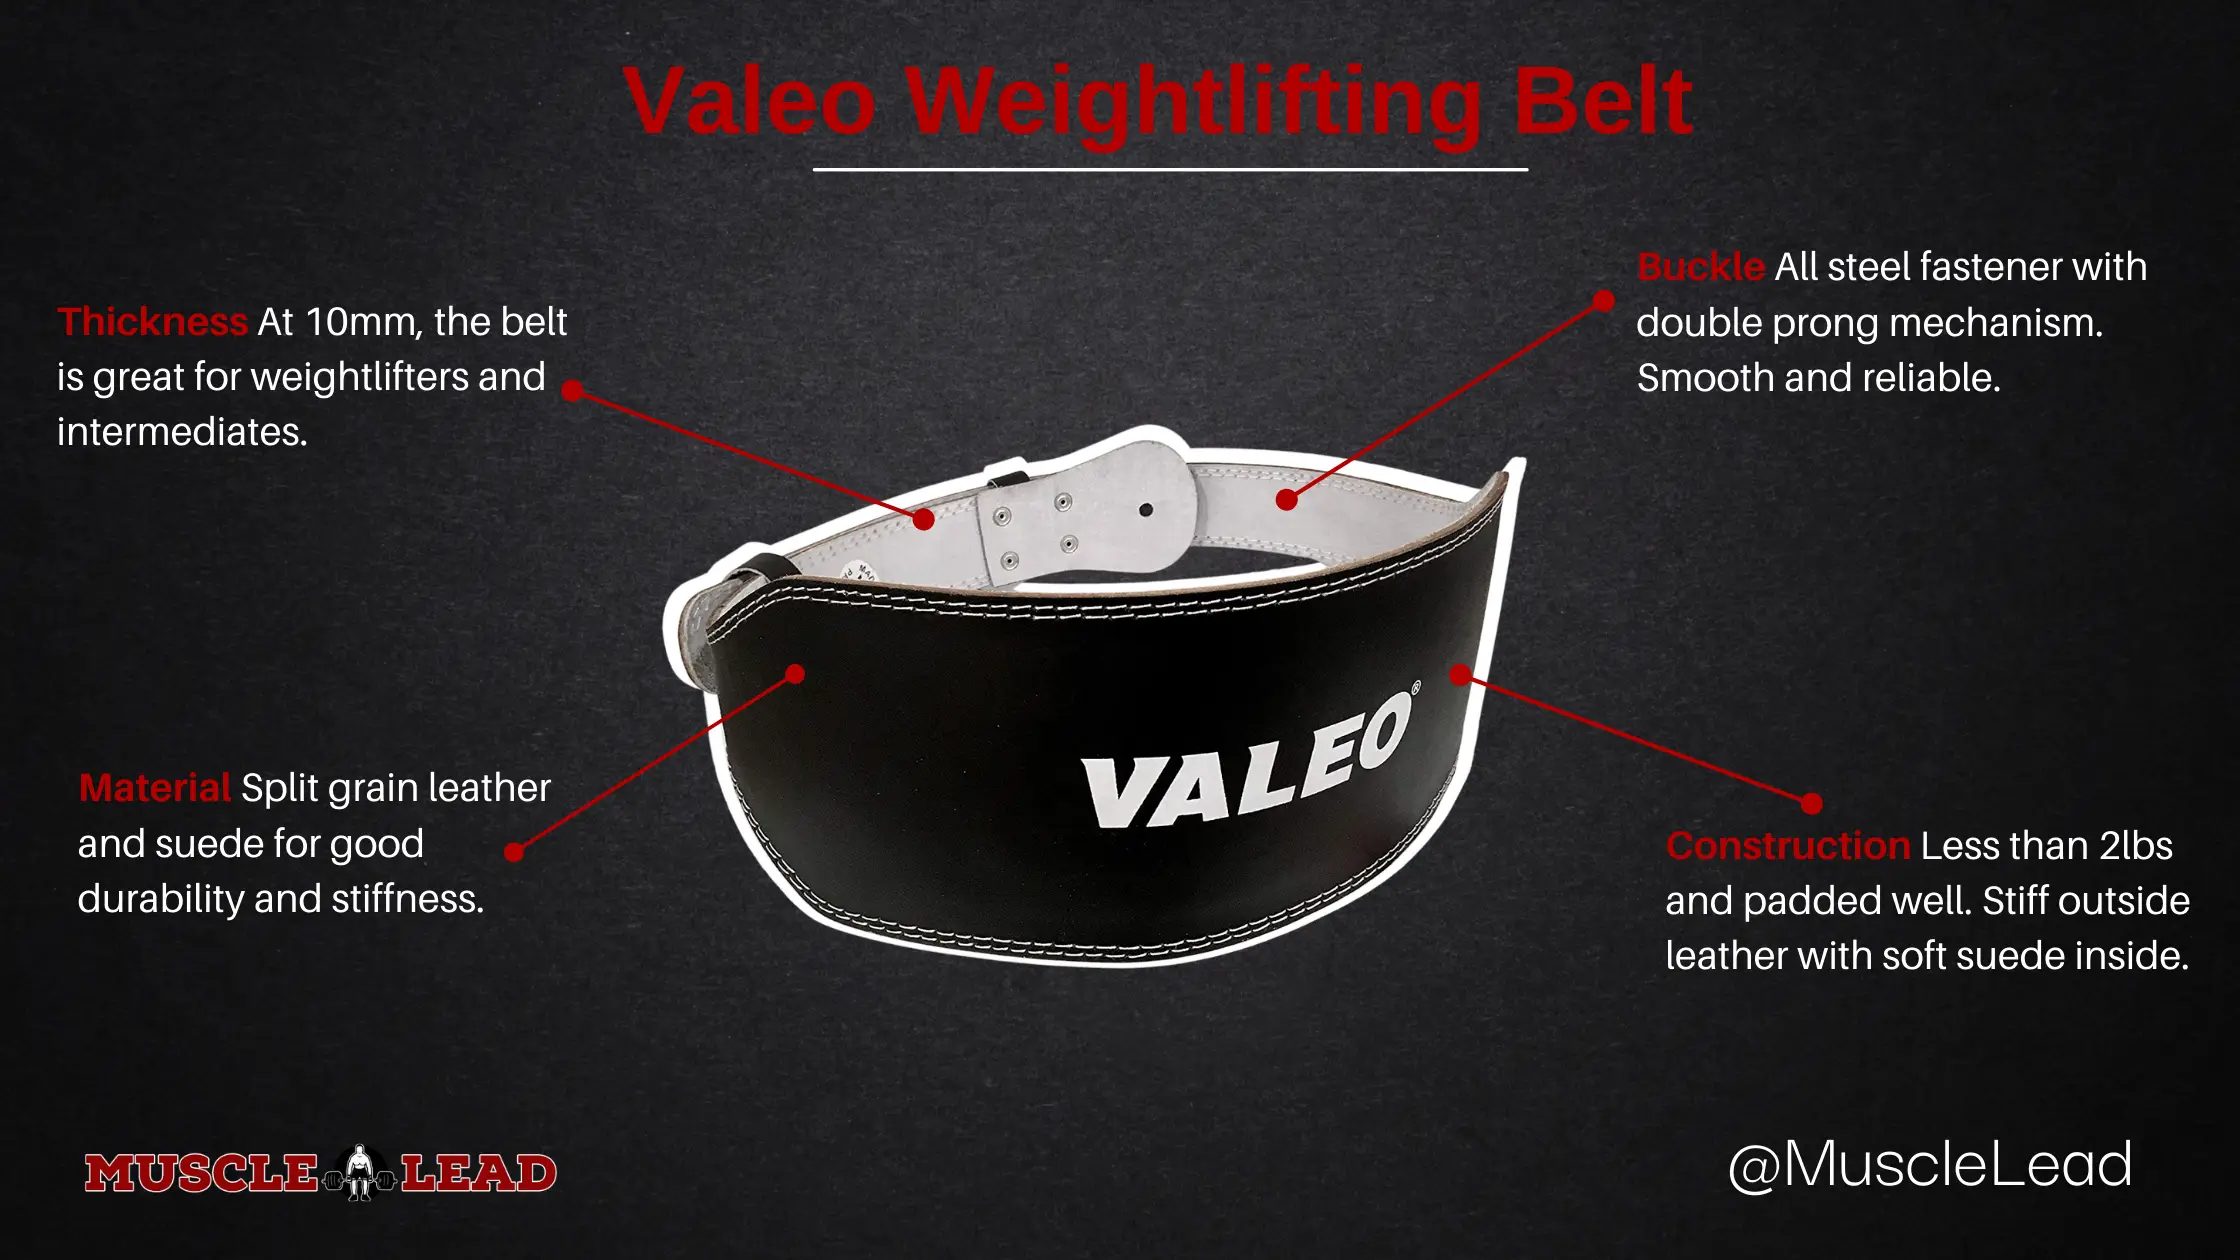 valeo weightlifting belt overview